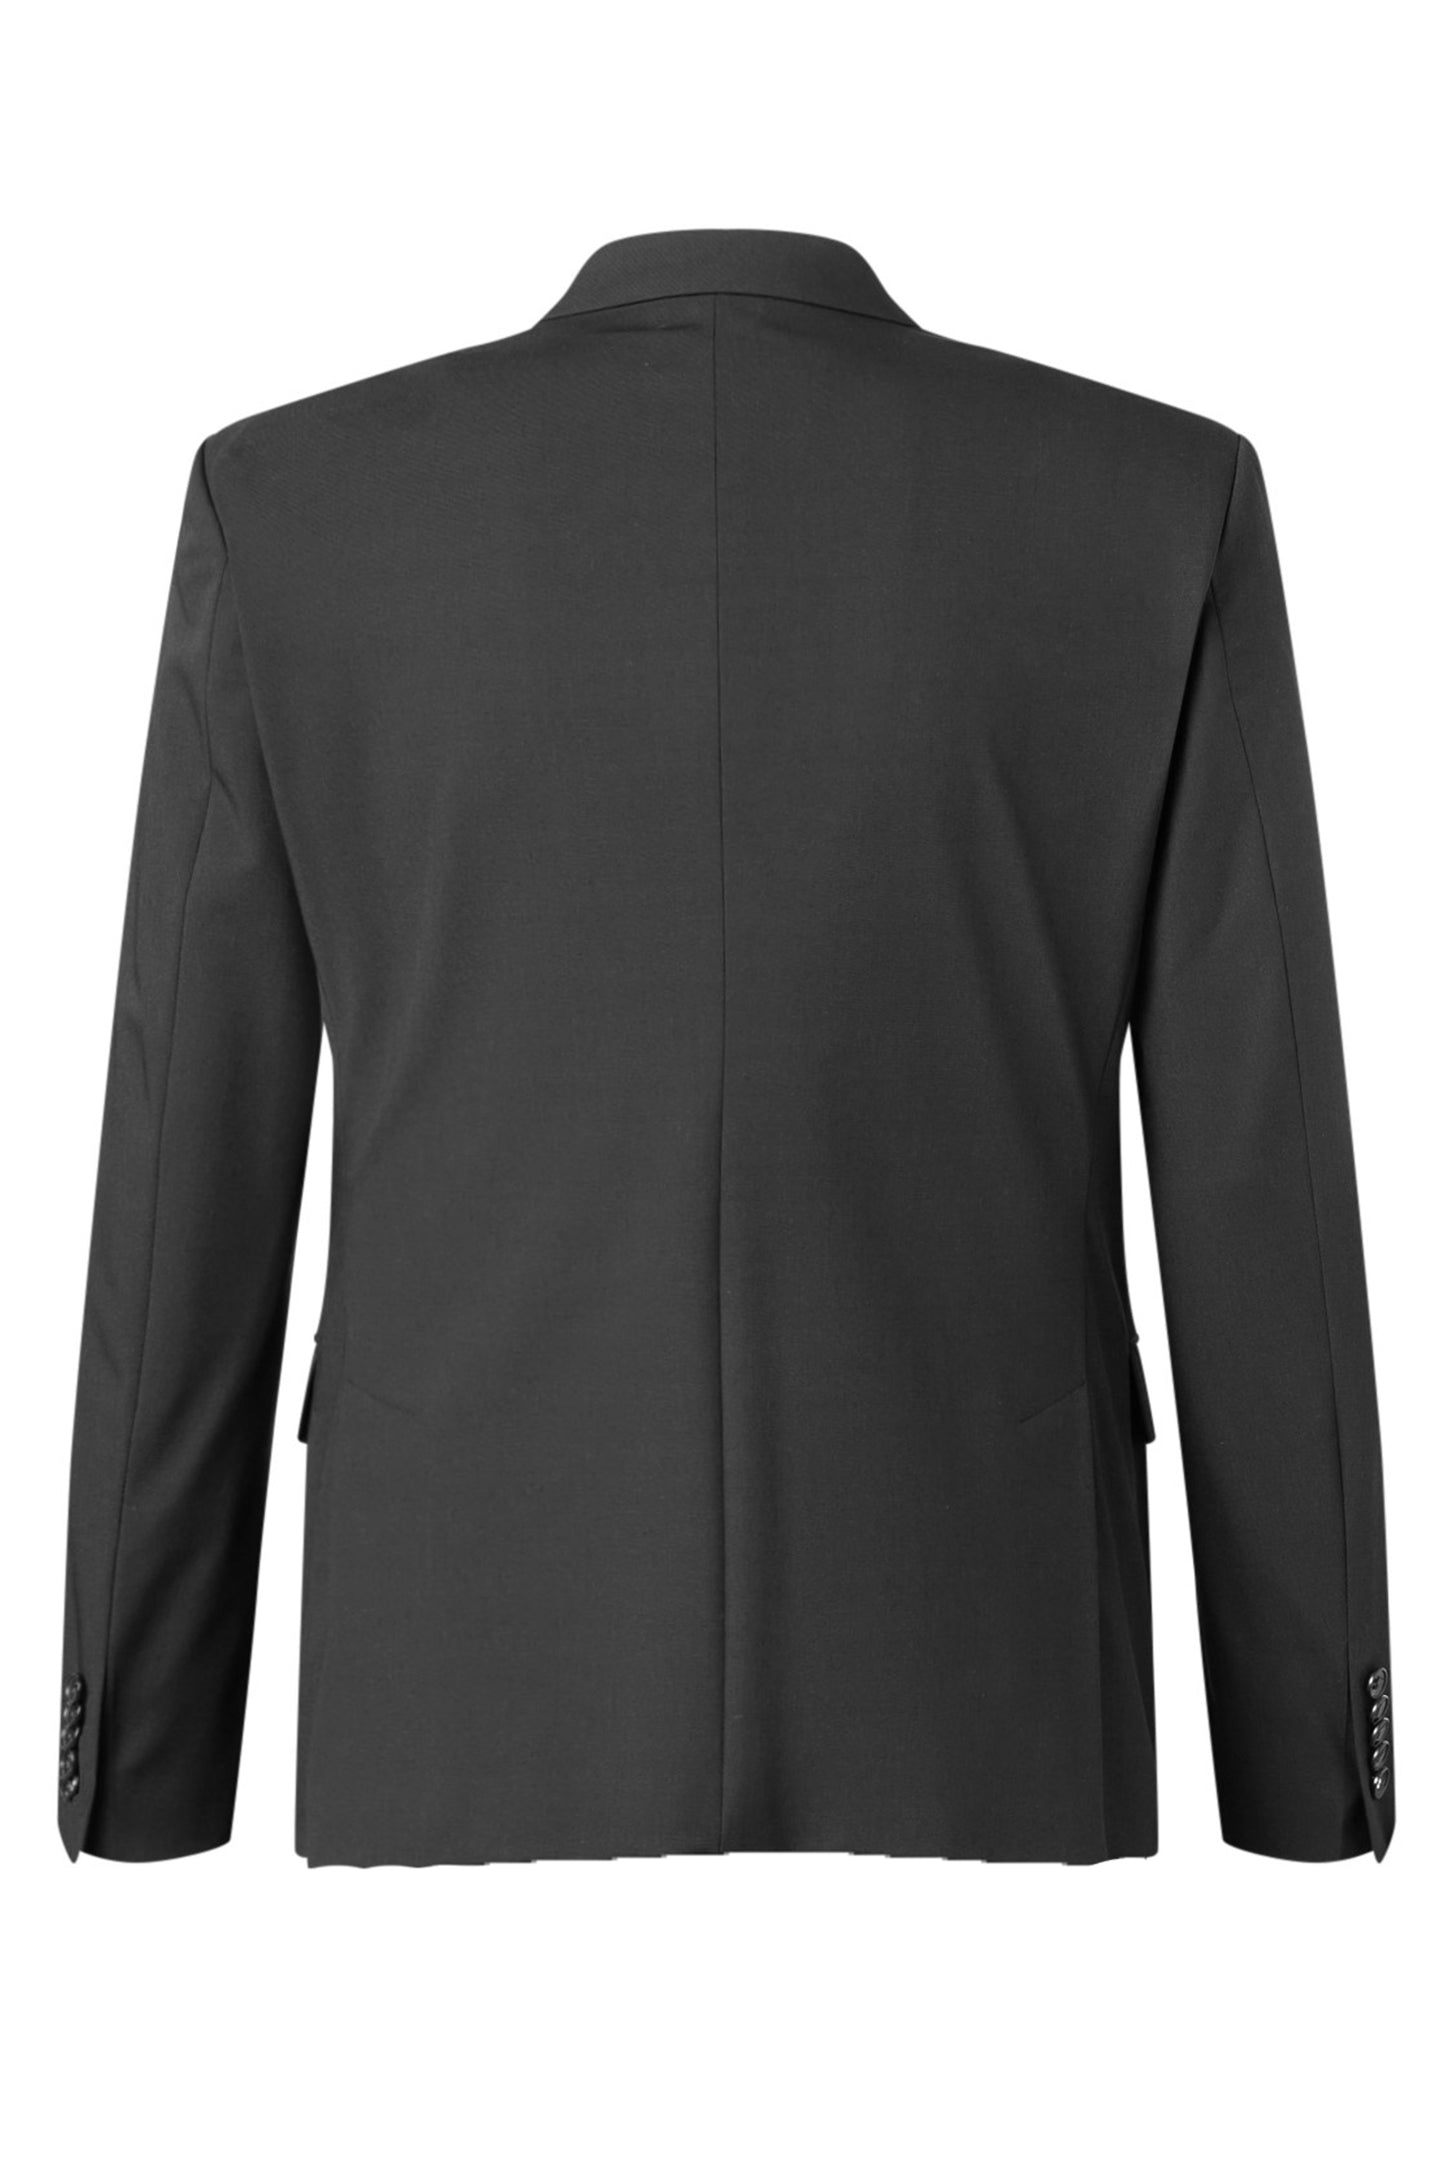 STRELLSON Aidan Flex Cross Suit, Black